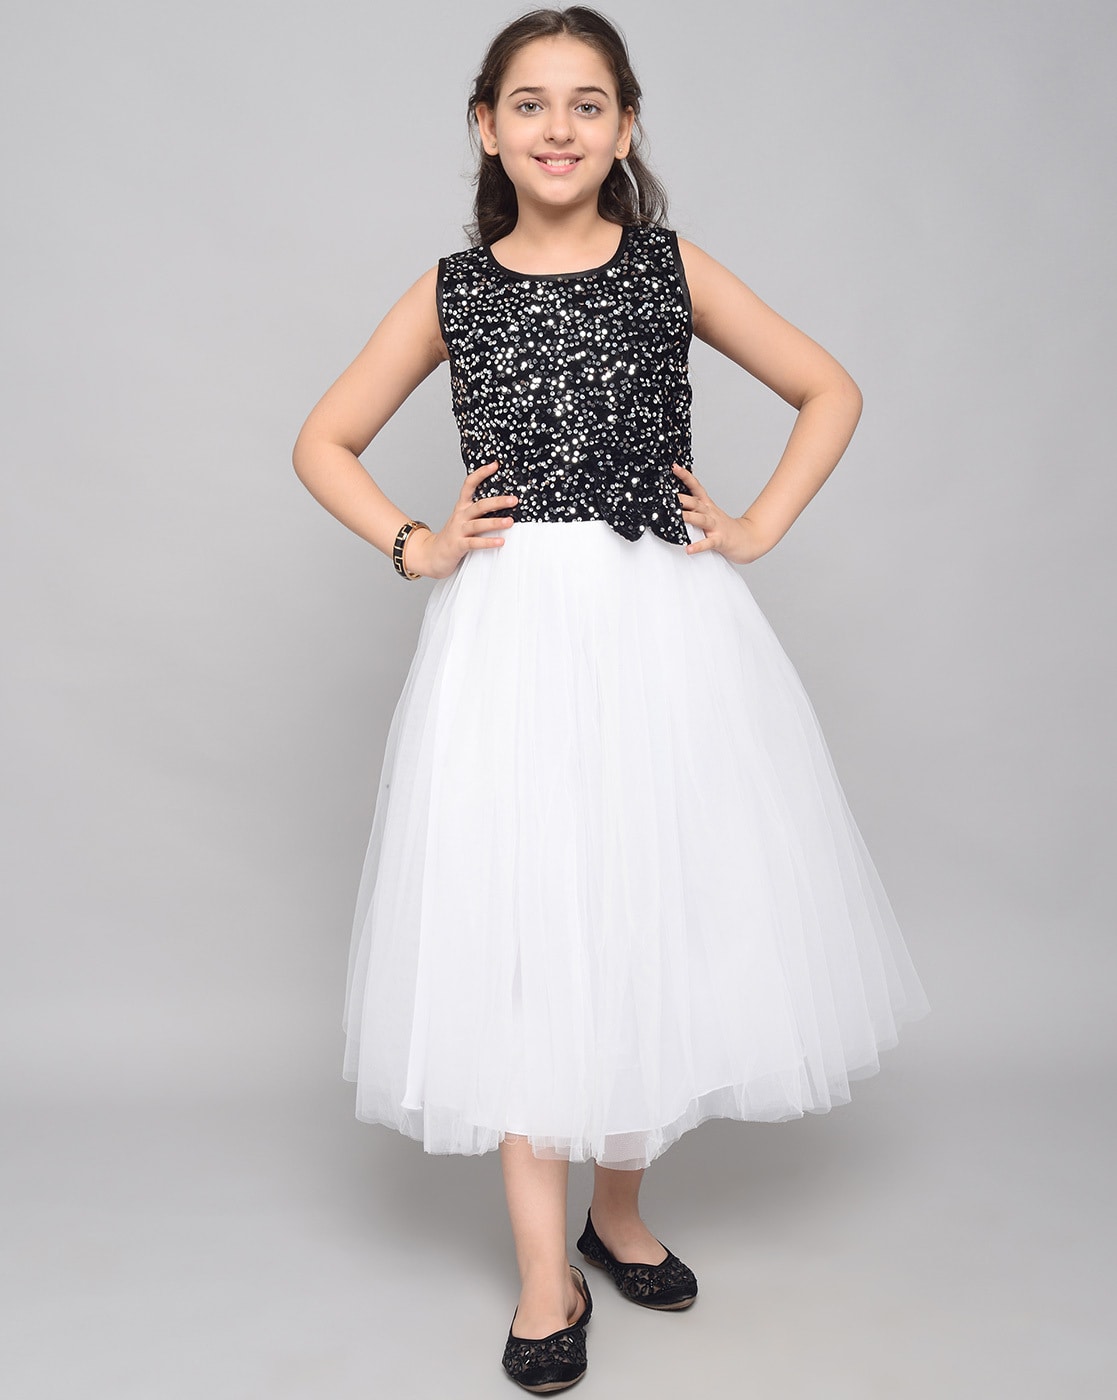 StylesILove Little Girl Checkered Tunic Dress, Black and White (3-4 Years)  - Walmart.com